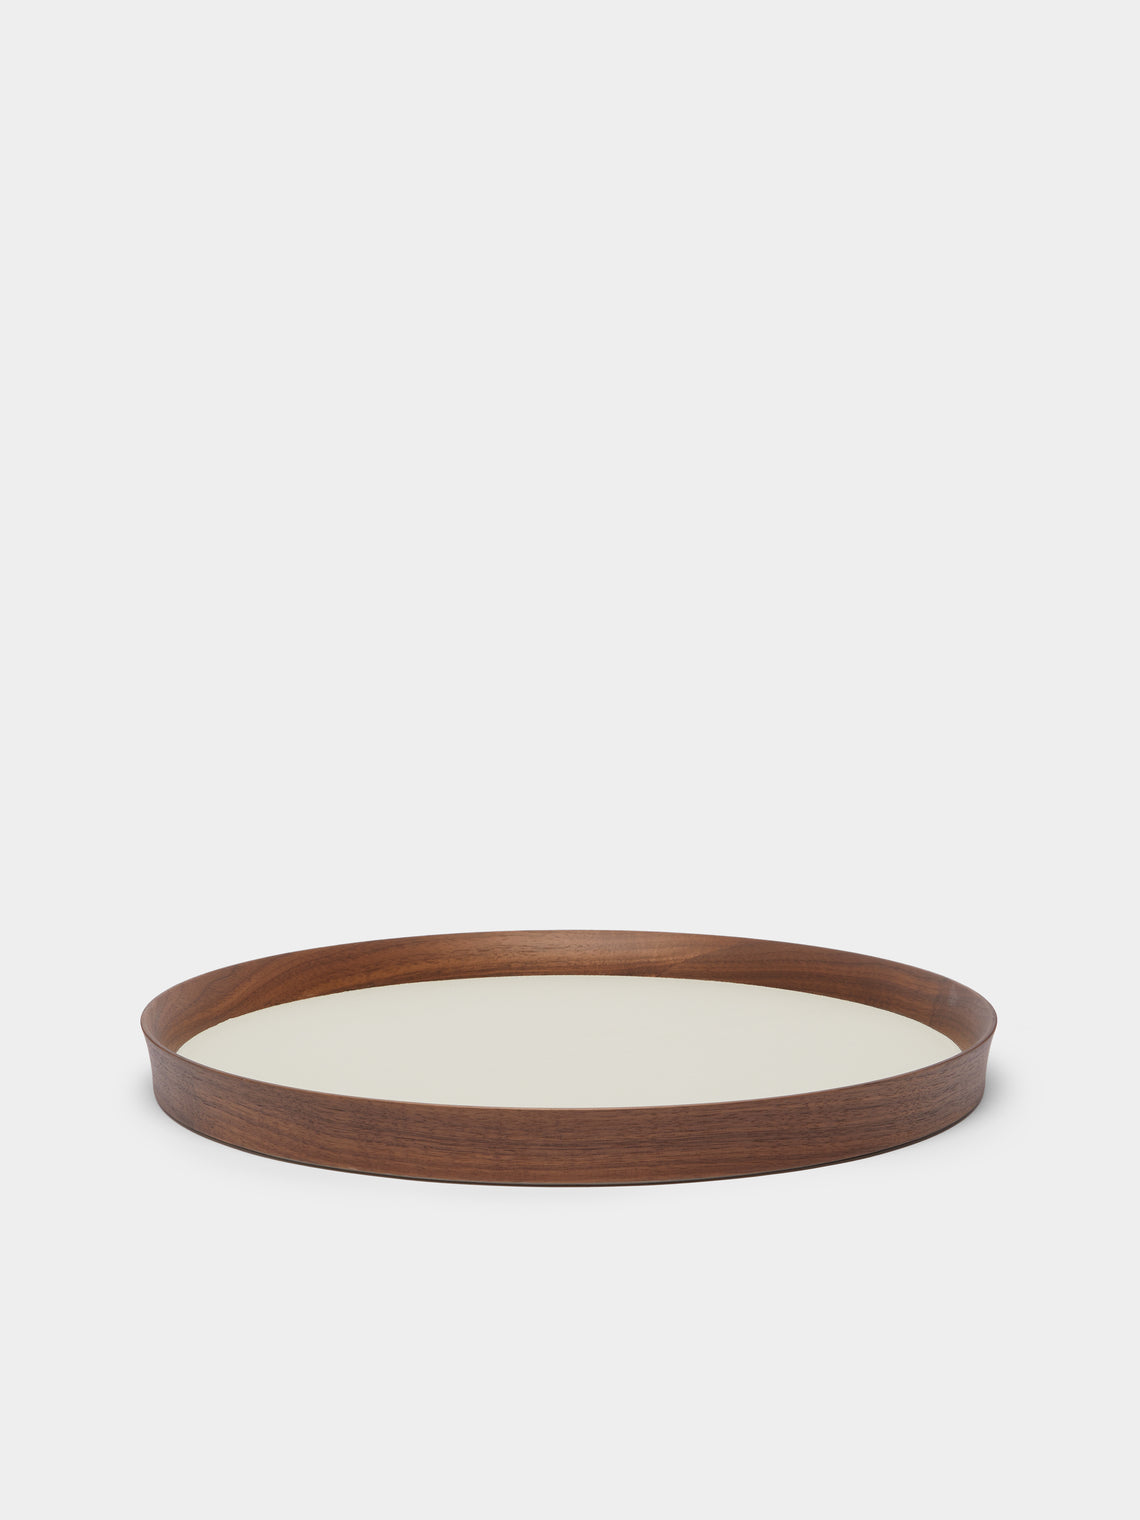 Giobagnara x Poltrona Frau - Walnut Medium Round Tray with Leather Inlay -  - ABASK